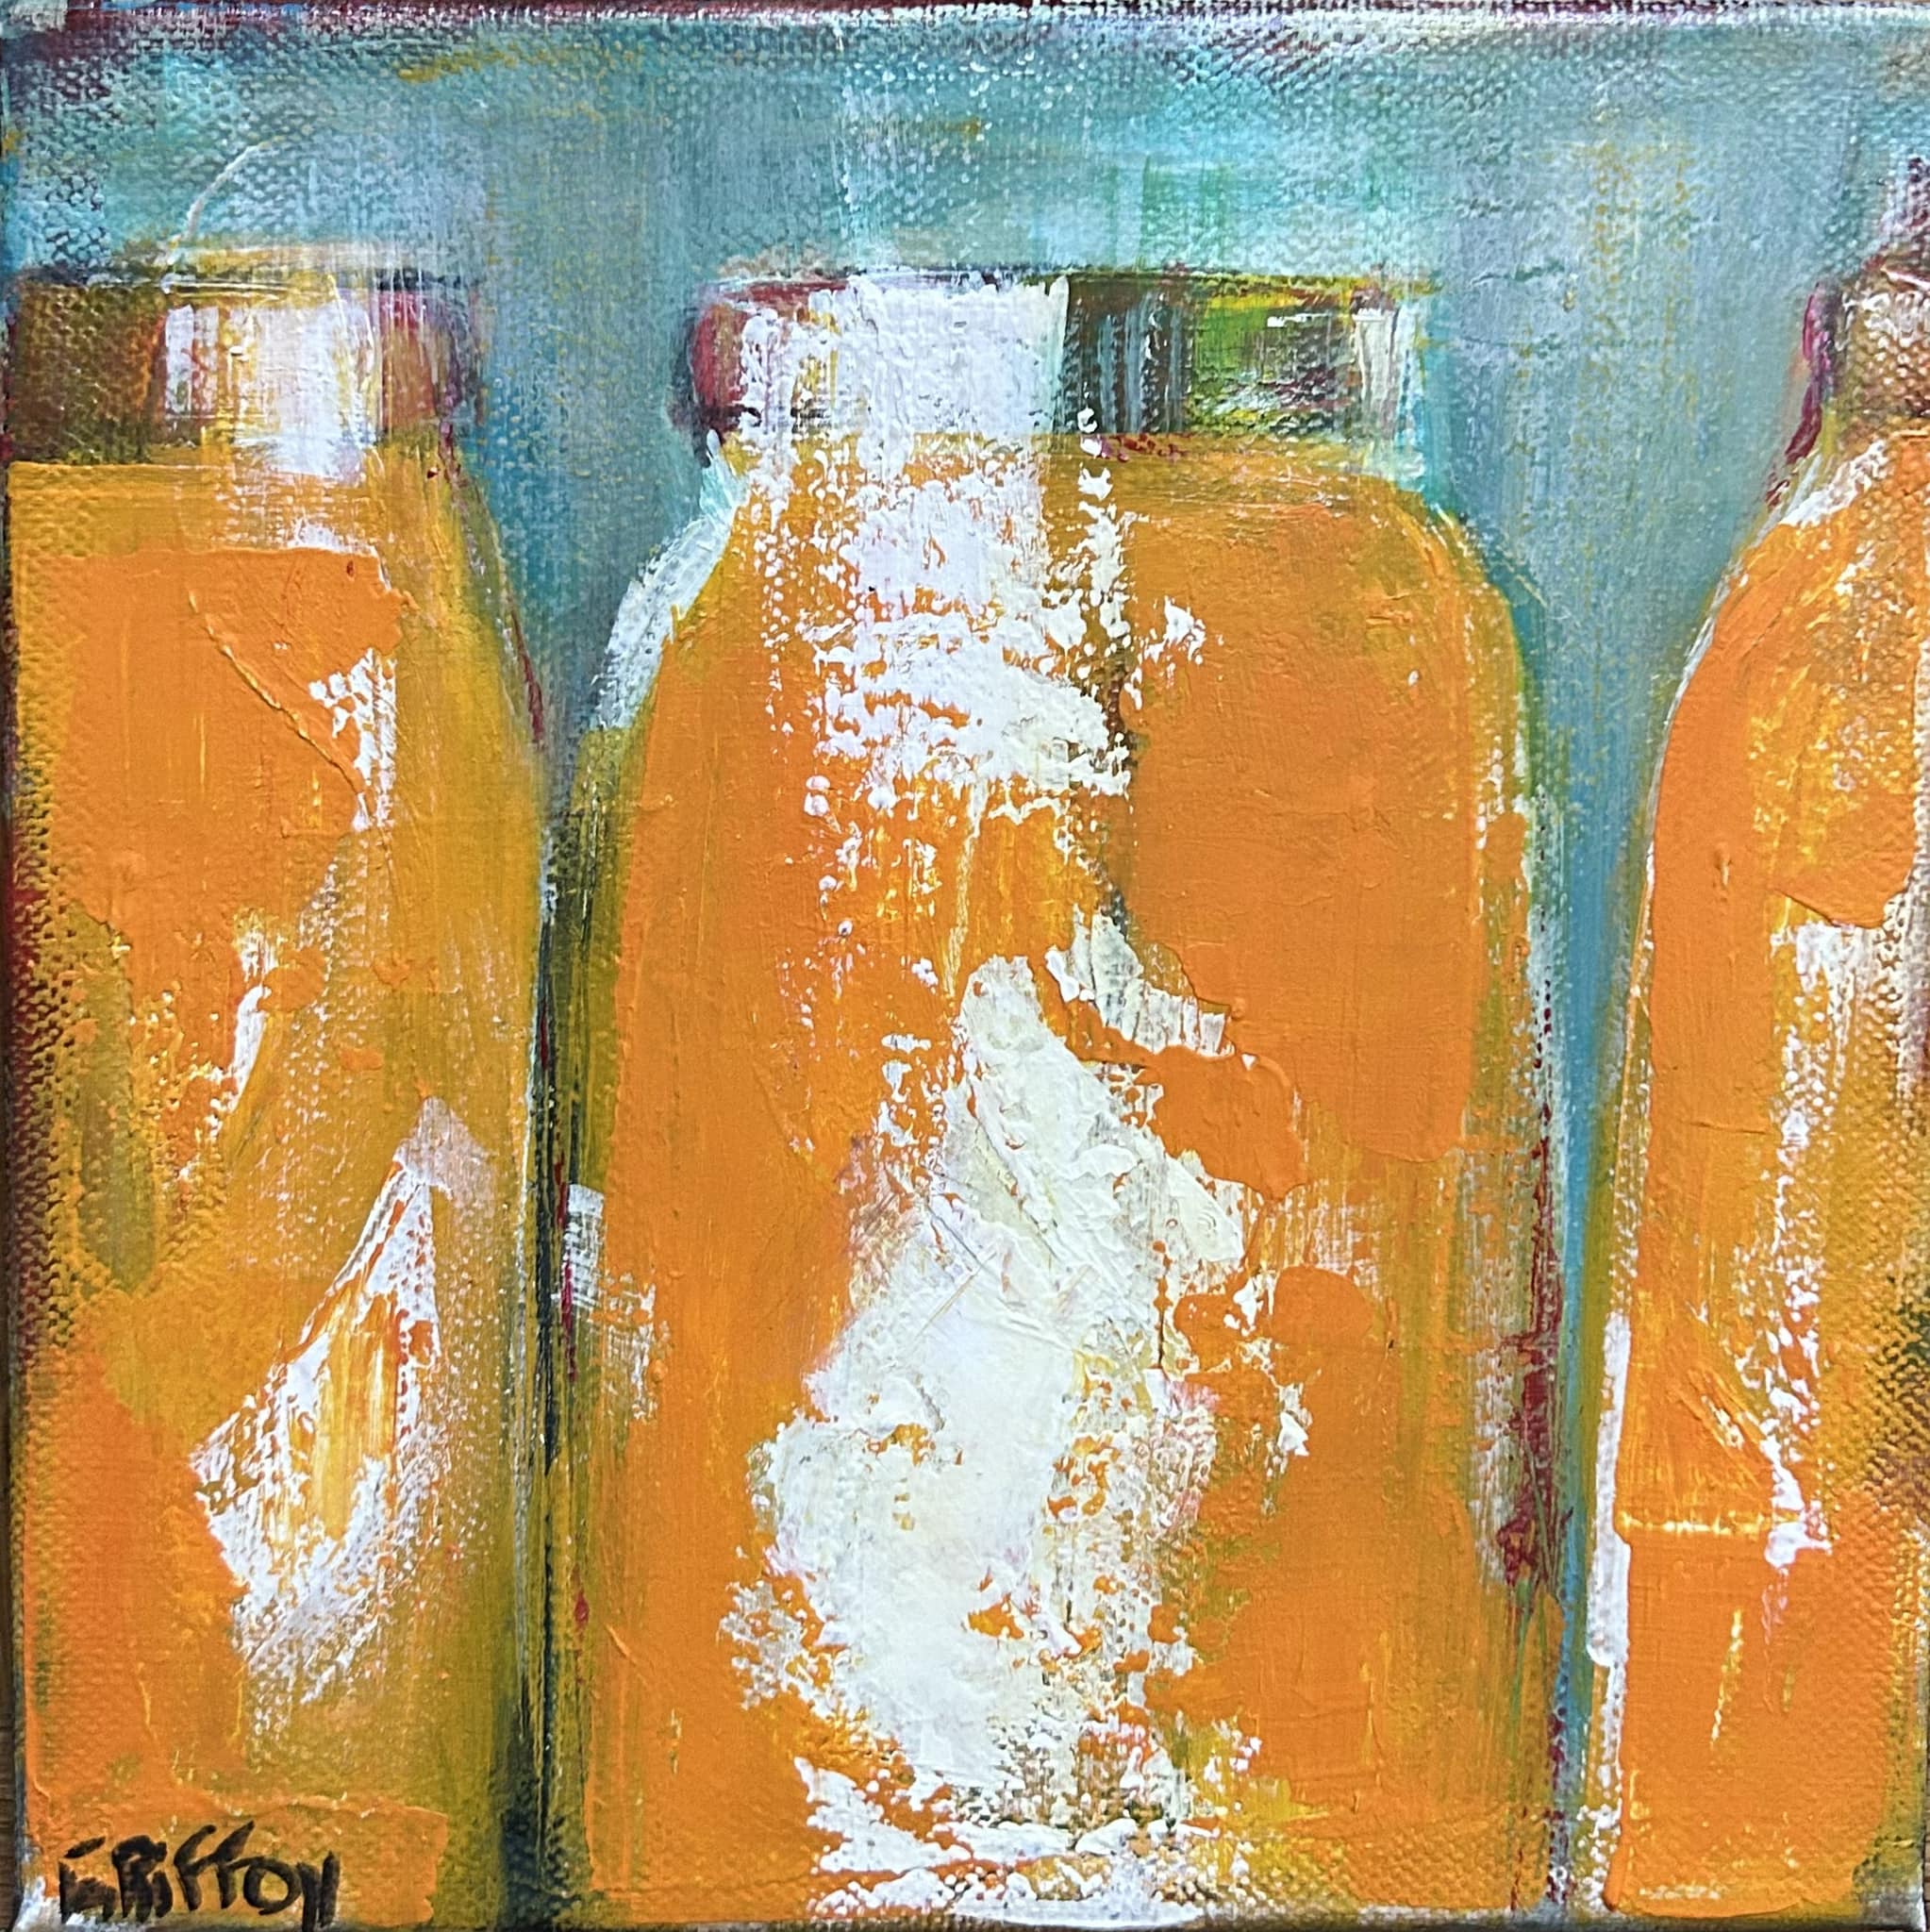 Oranges in a bottle